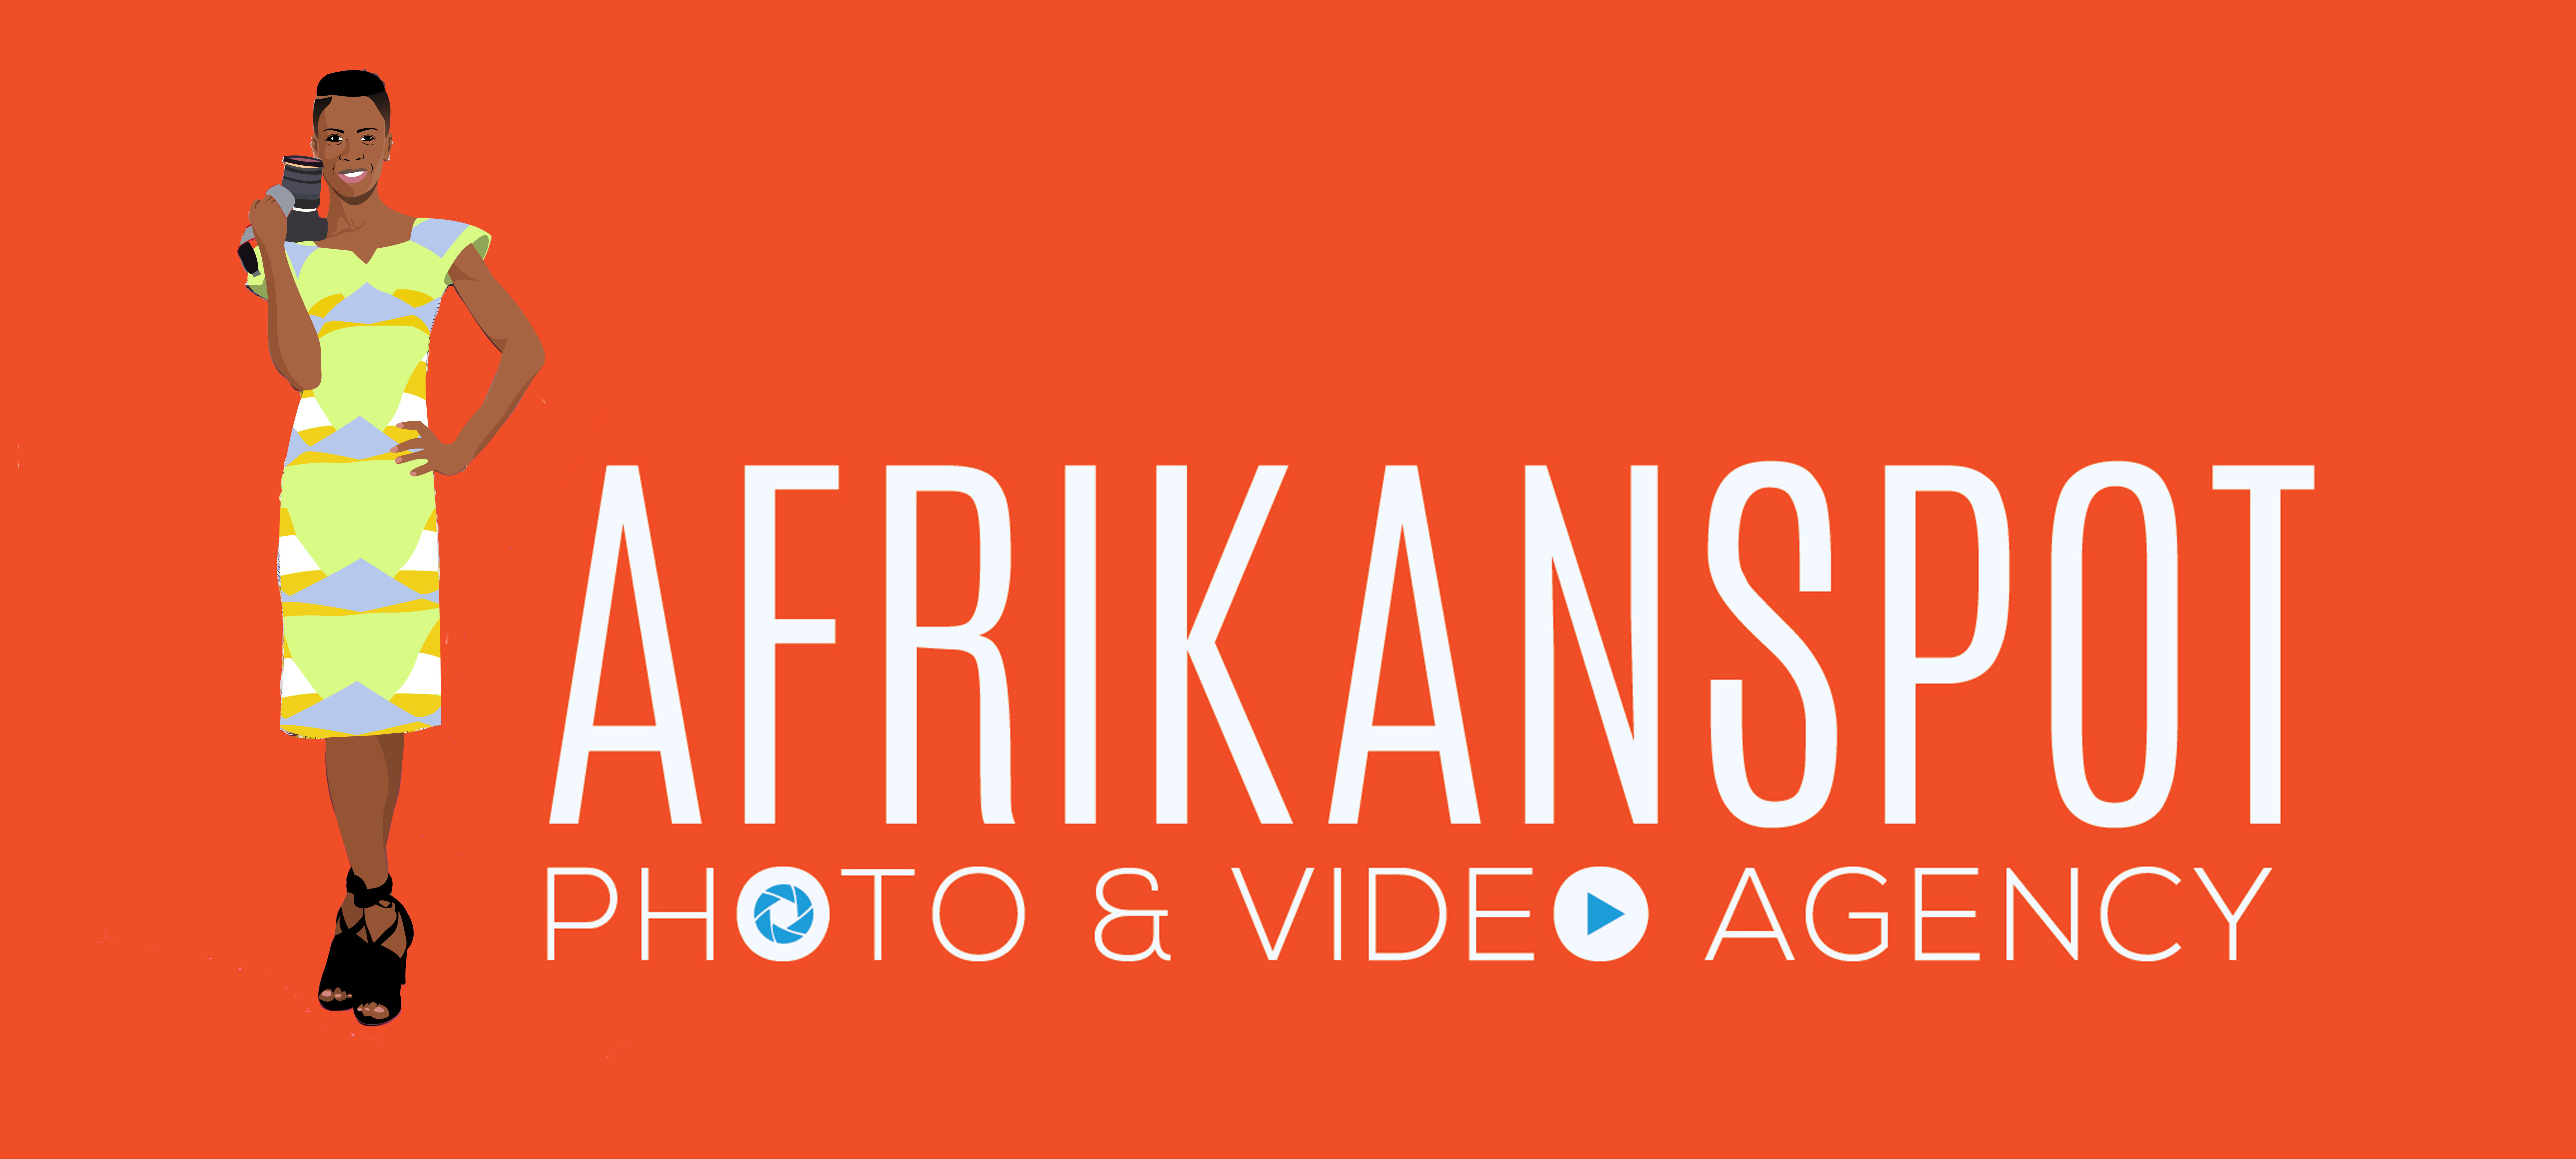 Afrikanspot Photo & Video Agency